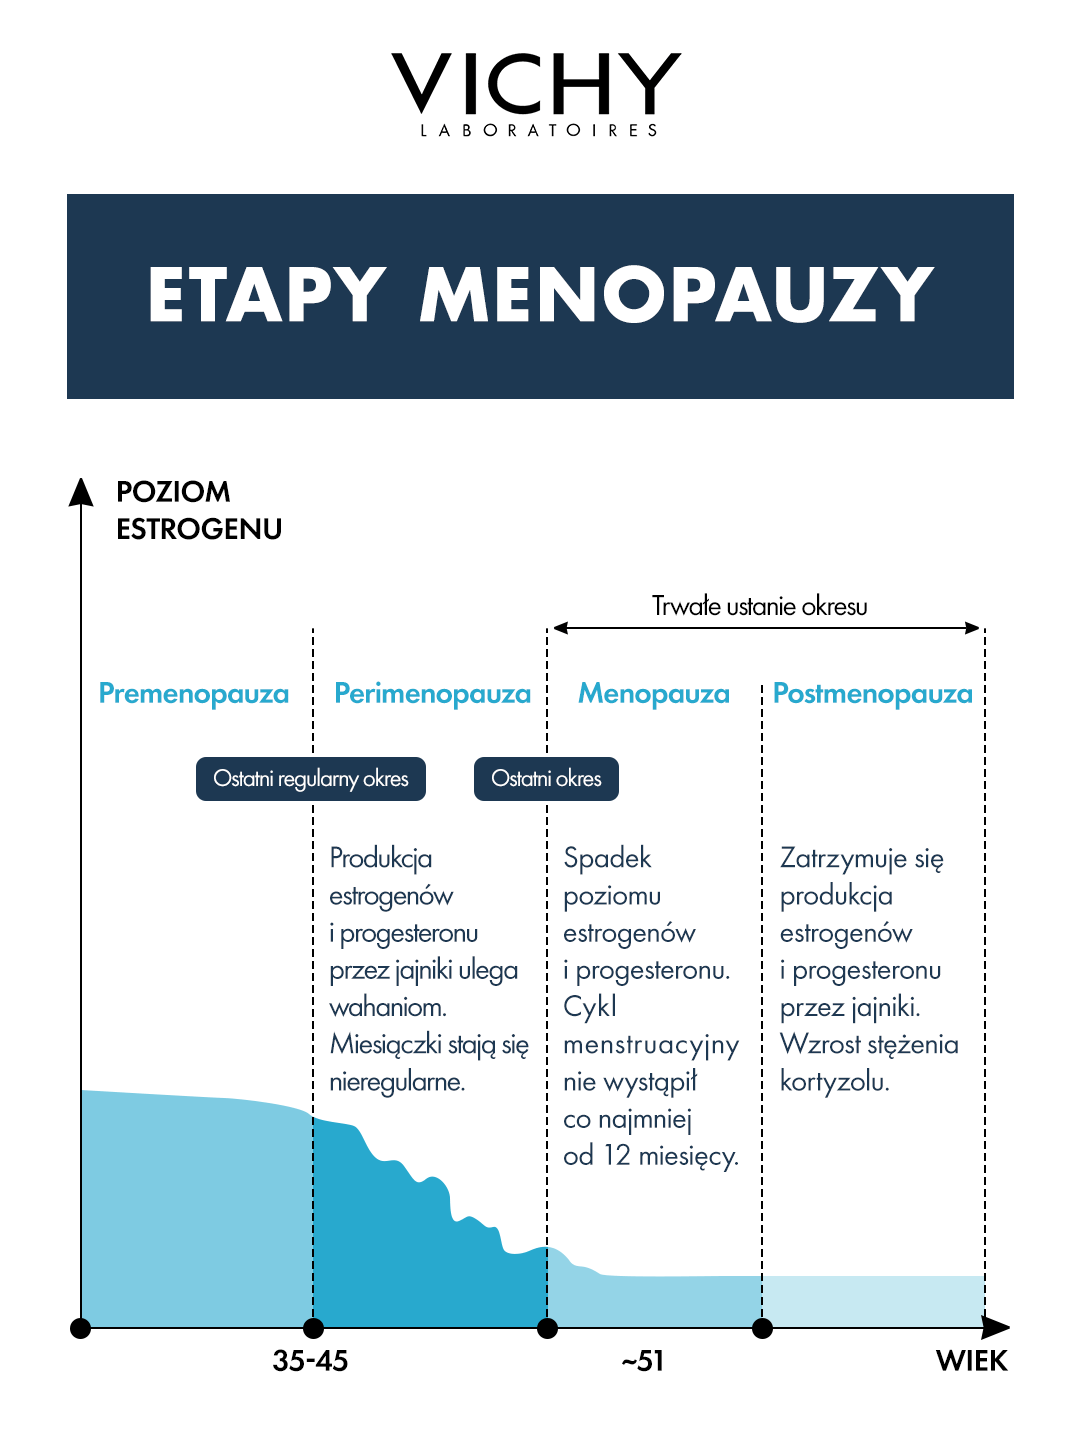 Menopauza a miesiączka - poznaj etapy menopauzy z Vichy Laboratoires